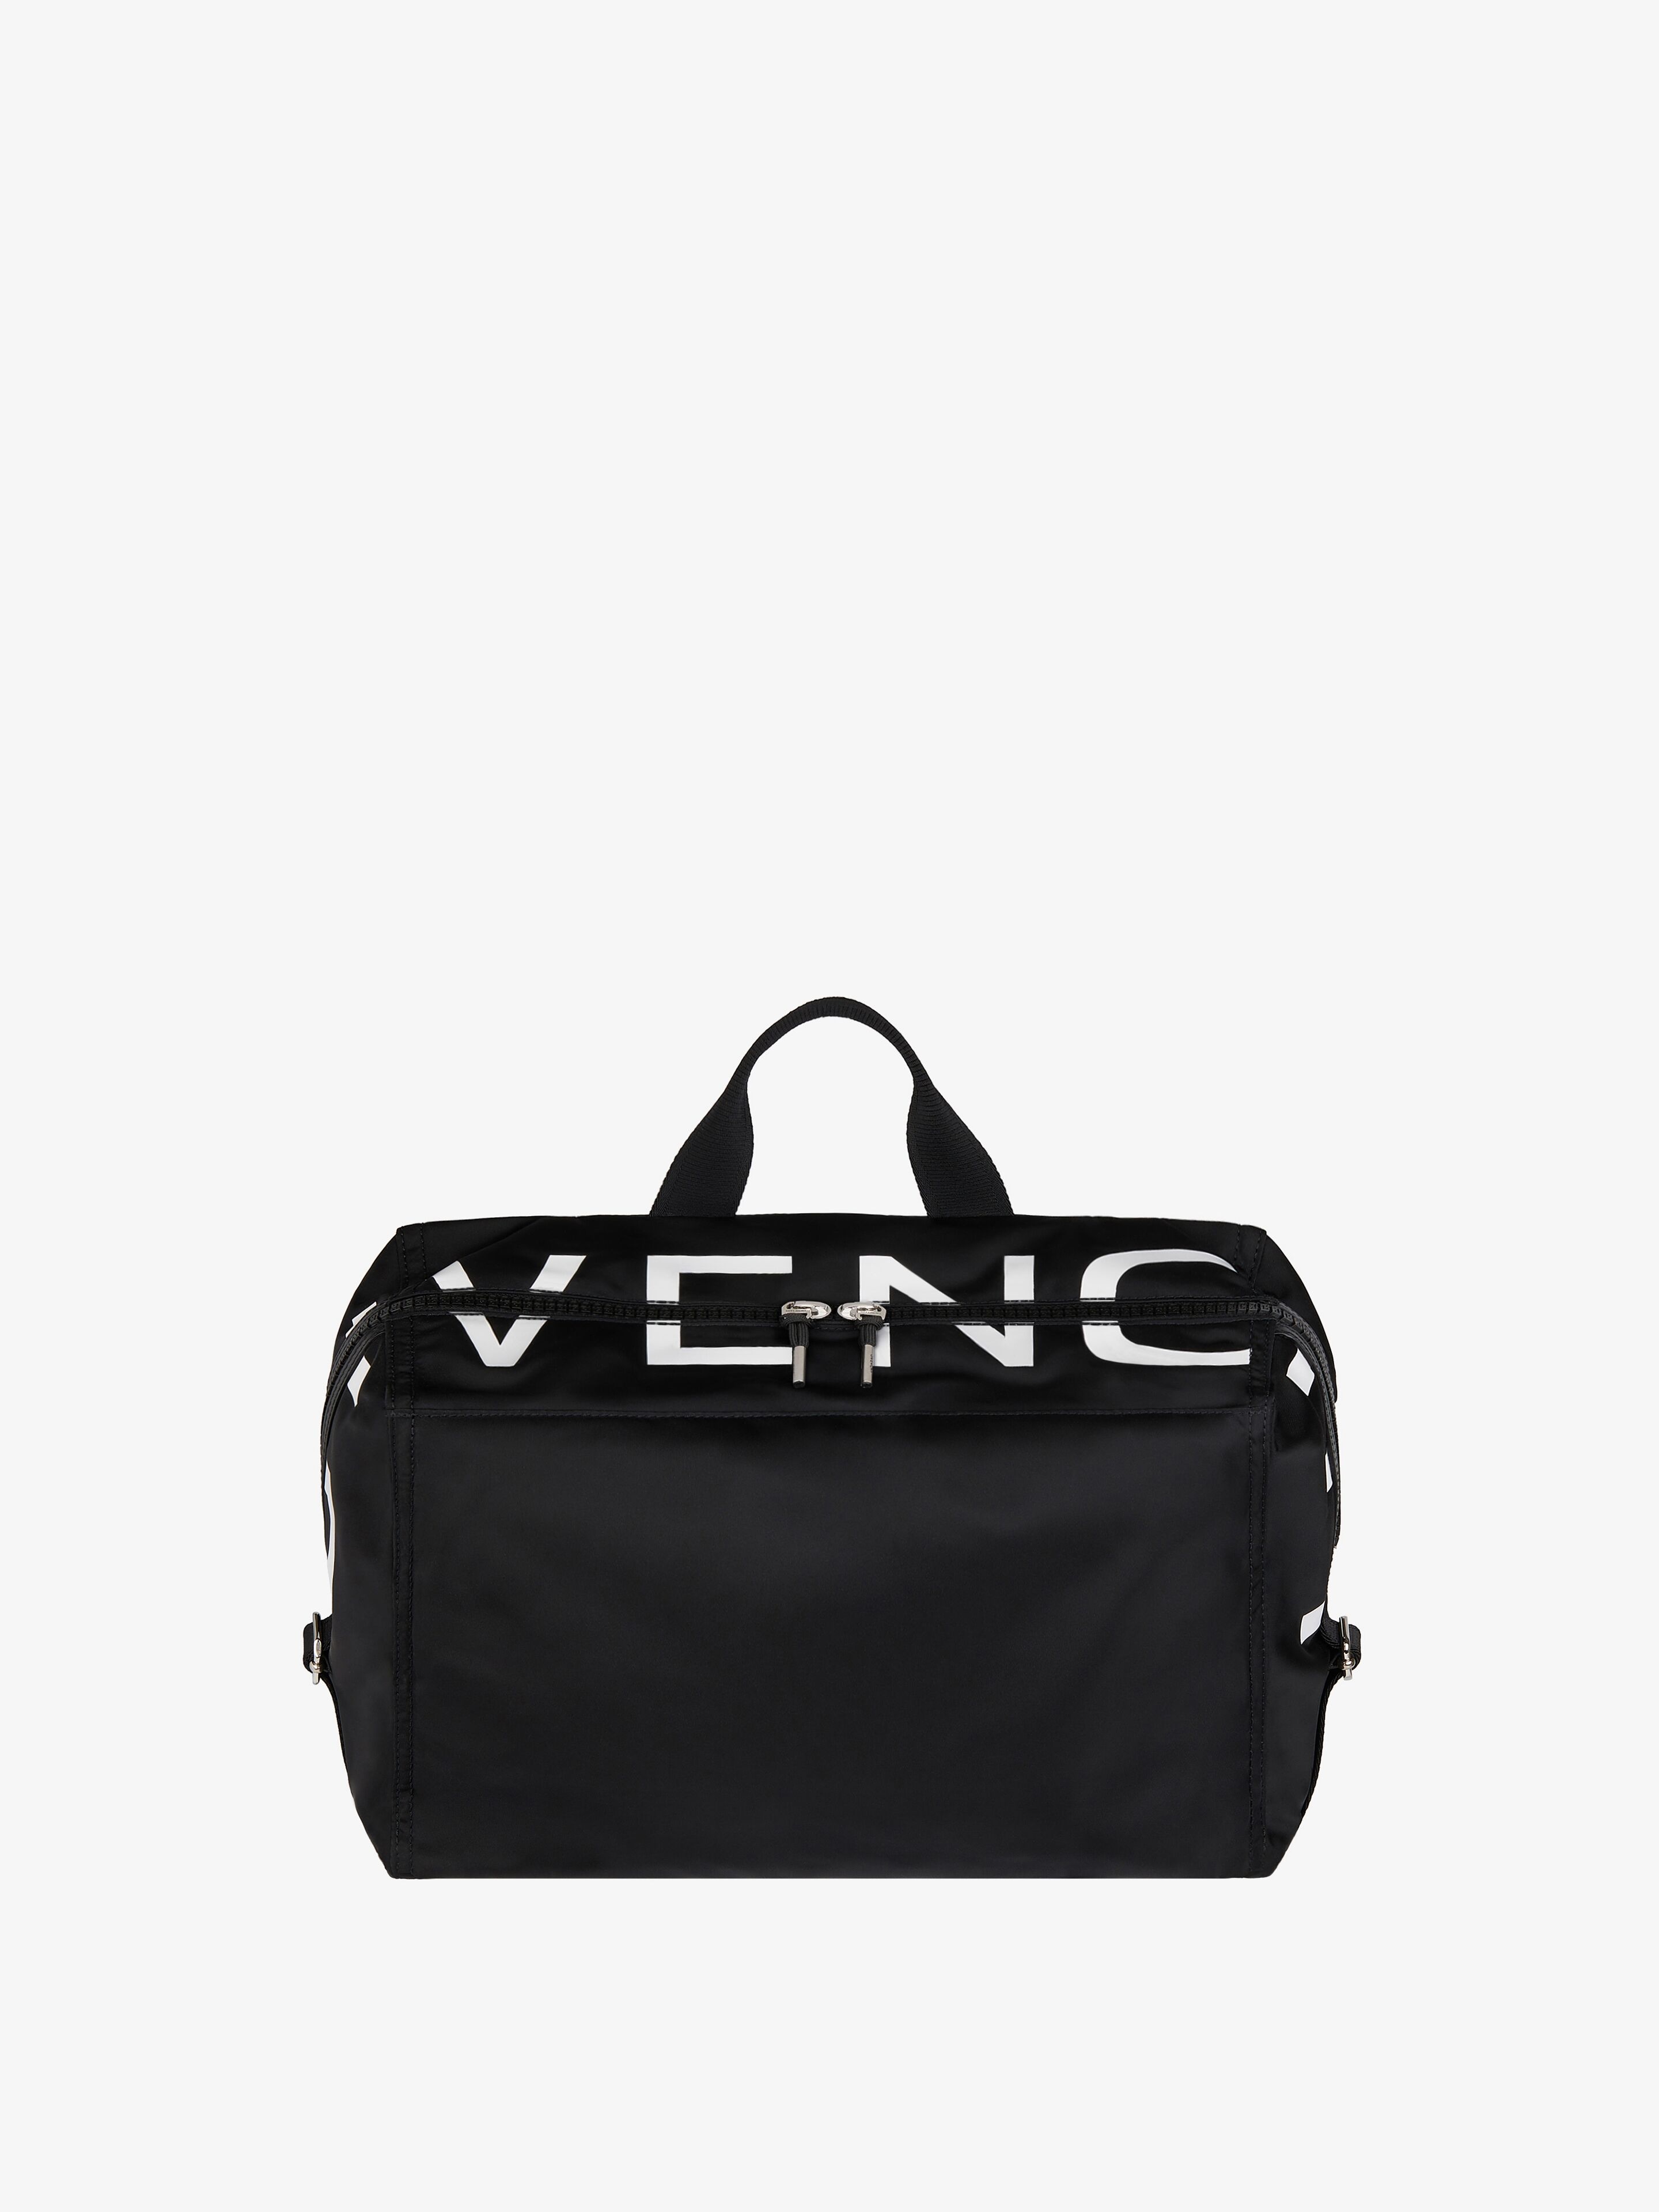 Givenchy Pandora Medium Bag In Black